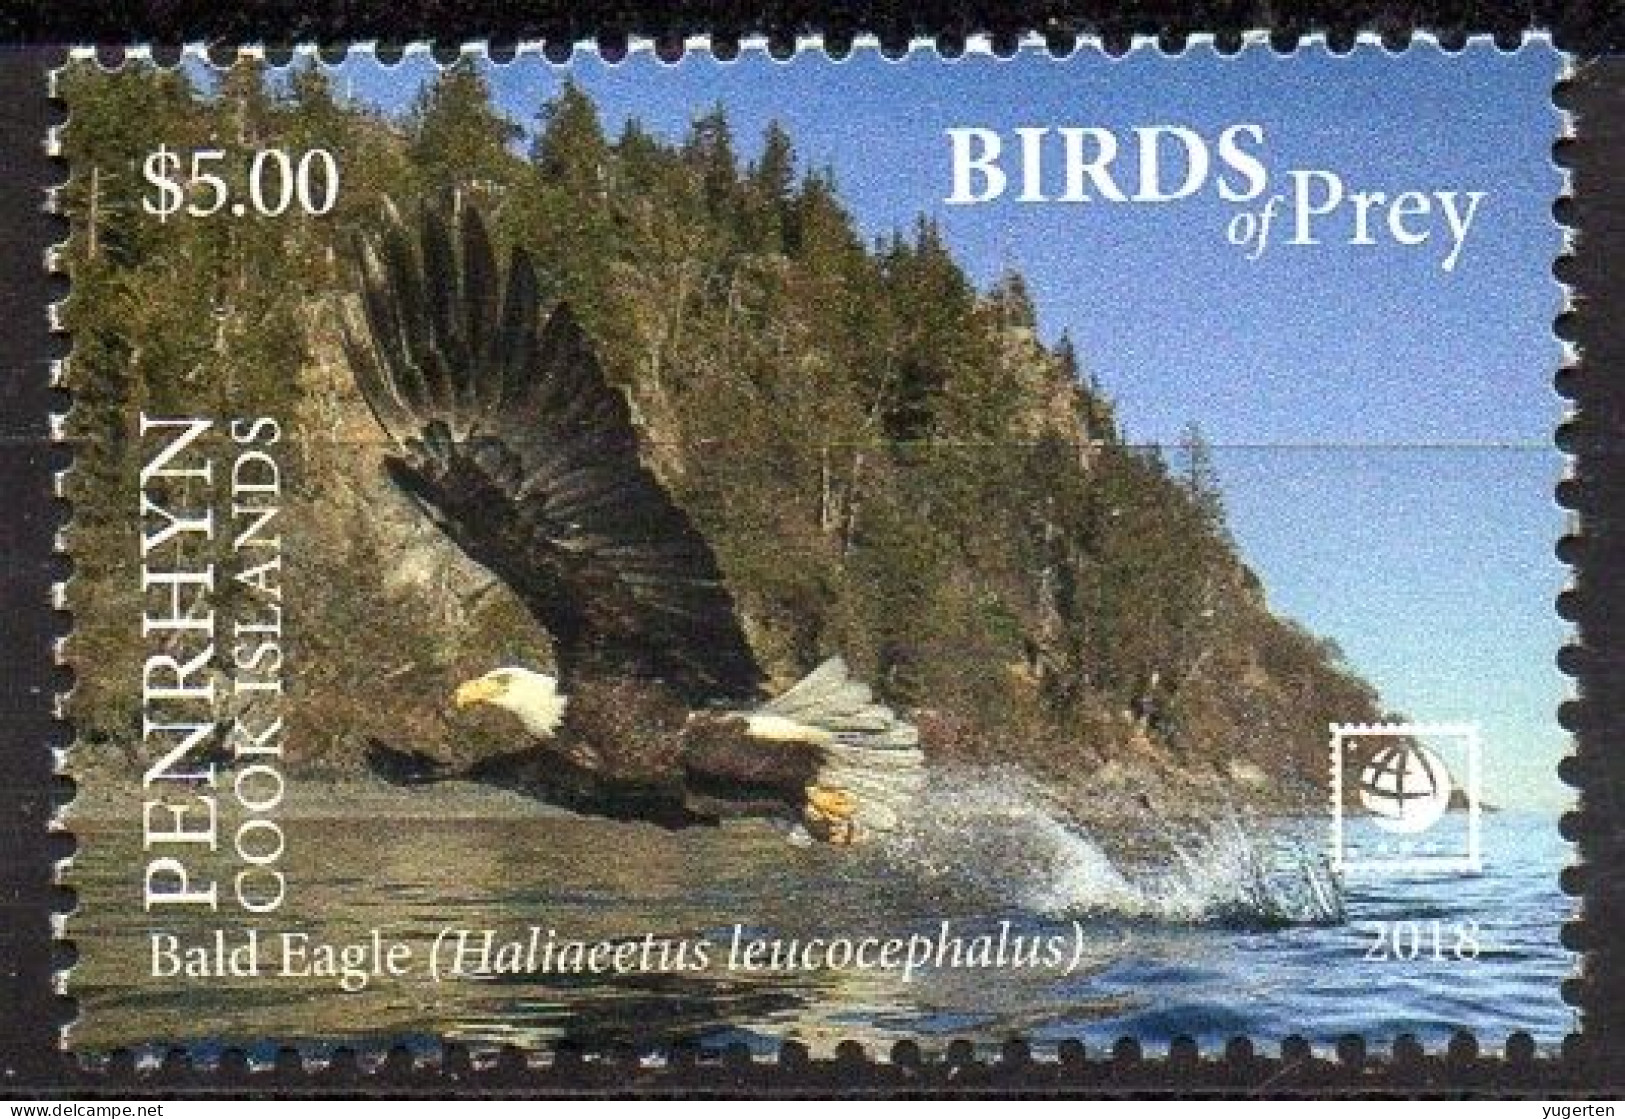 PENRHYN - 1v - MNH -  Bald Eagle - Eagle Eagles Aquila Aigle Aigles Adler - Birds - Vögel - Aguilas Aquile - Eagles & Birds Of Prey